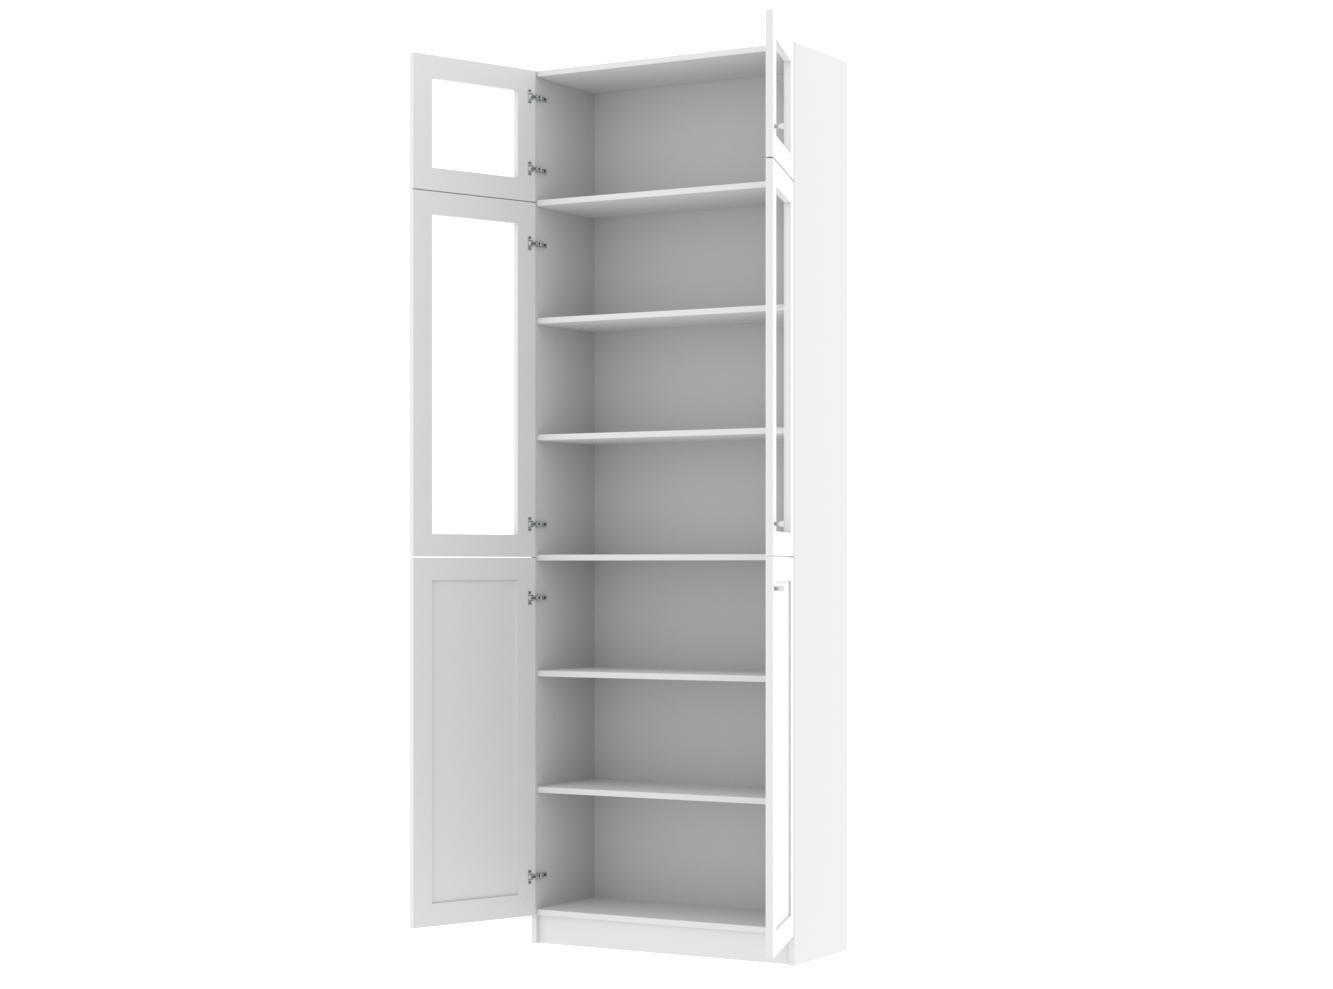  Книжный шкаф Билли 352 white ИКЕА (IKEA) изображение товара